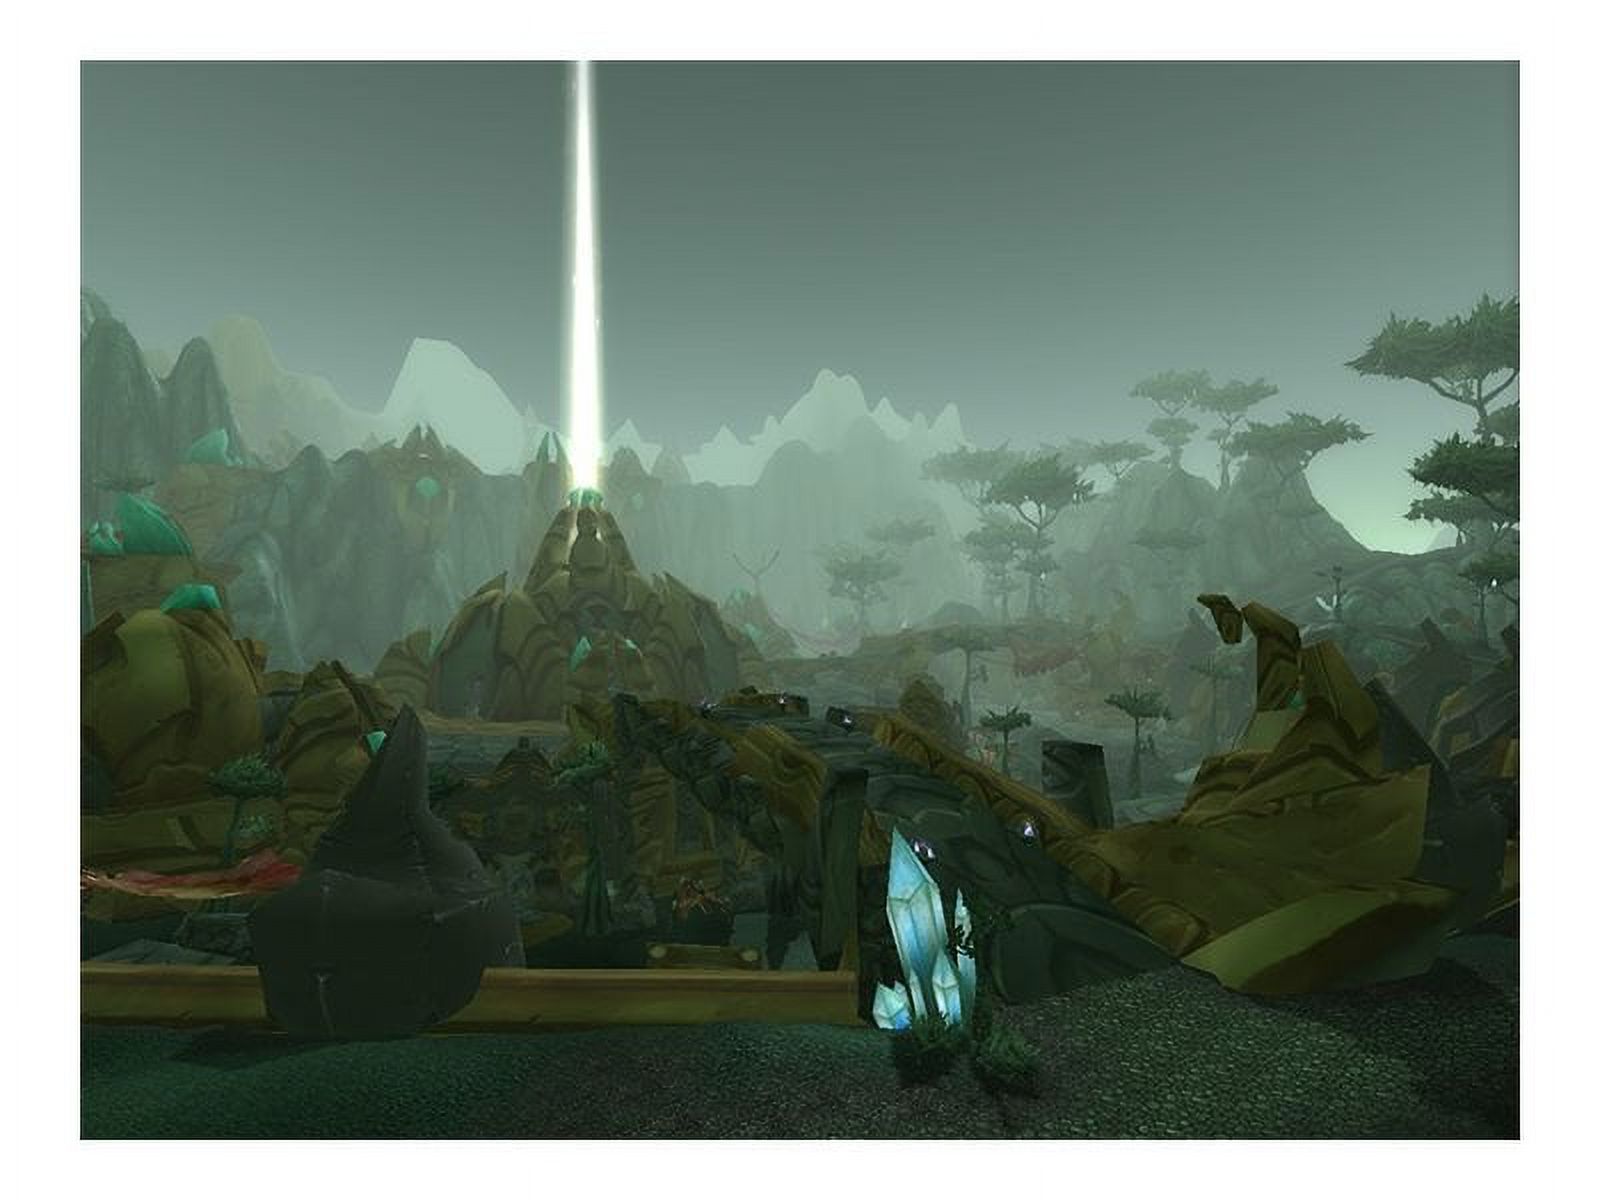 World of Warcraft: Mists of Pandaria - image 3 of 15